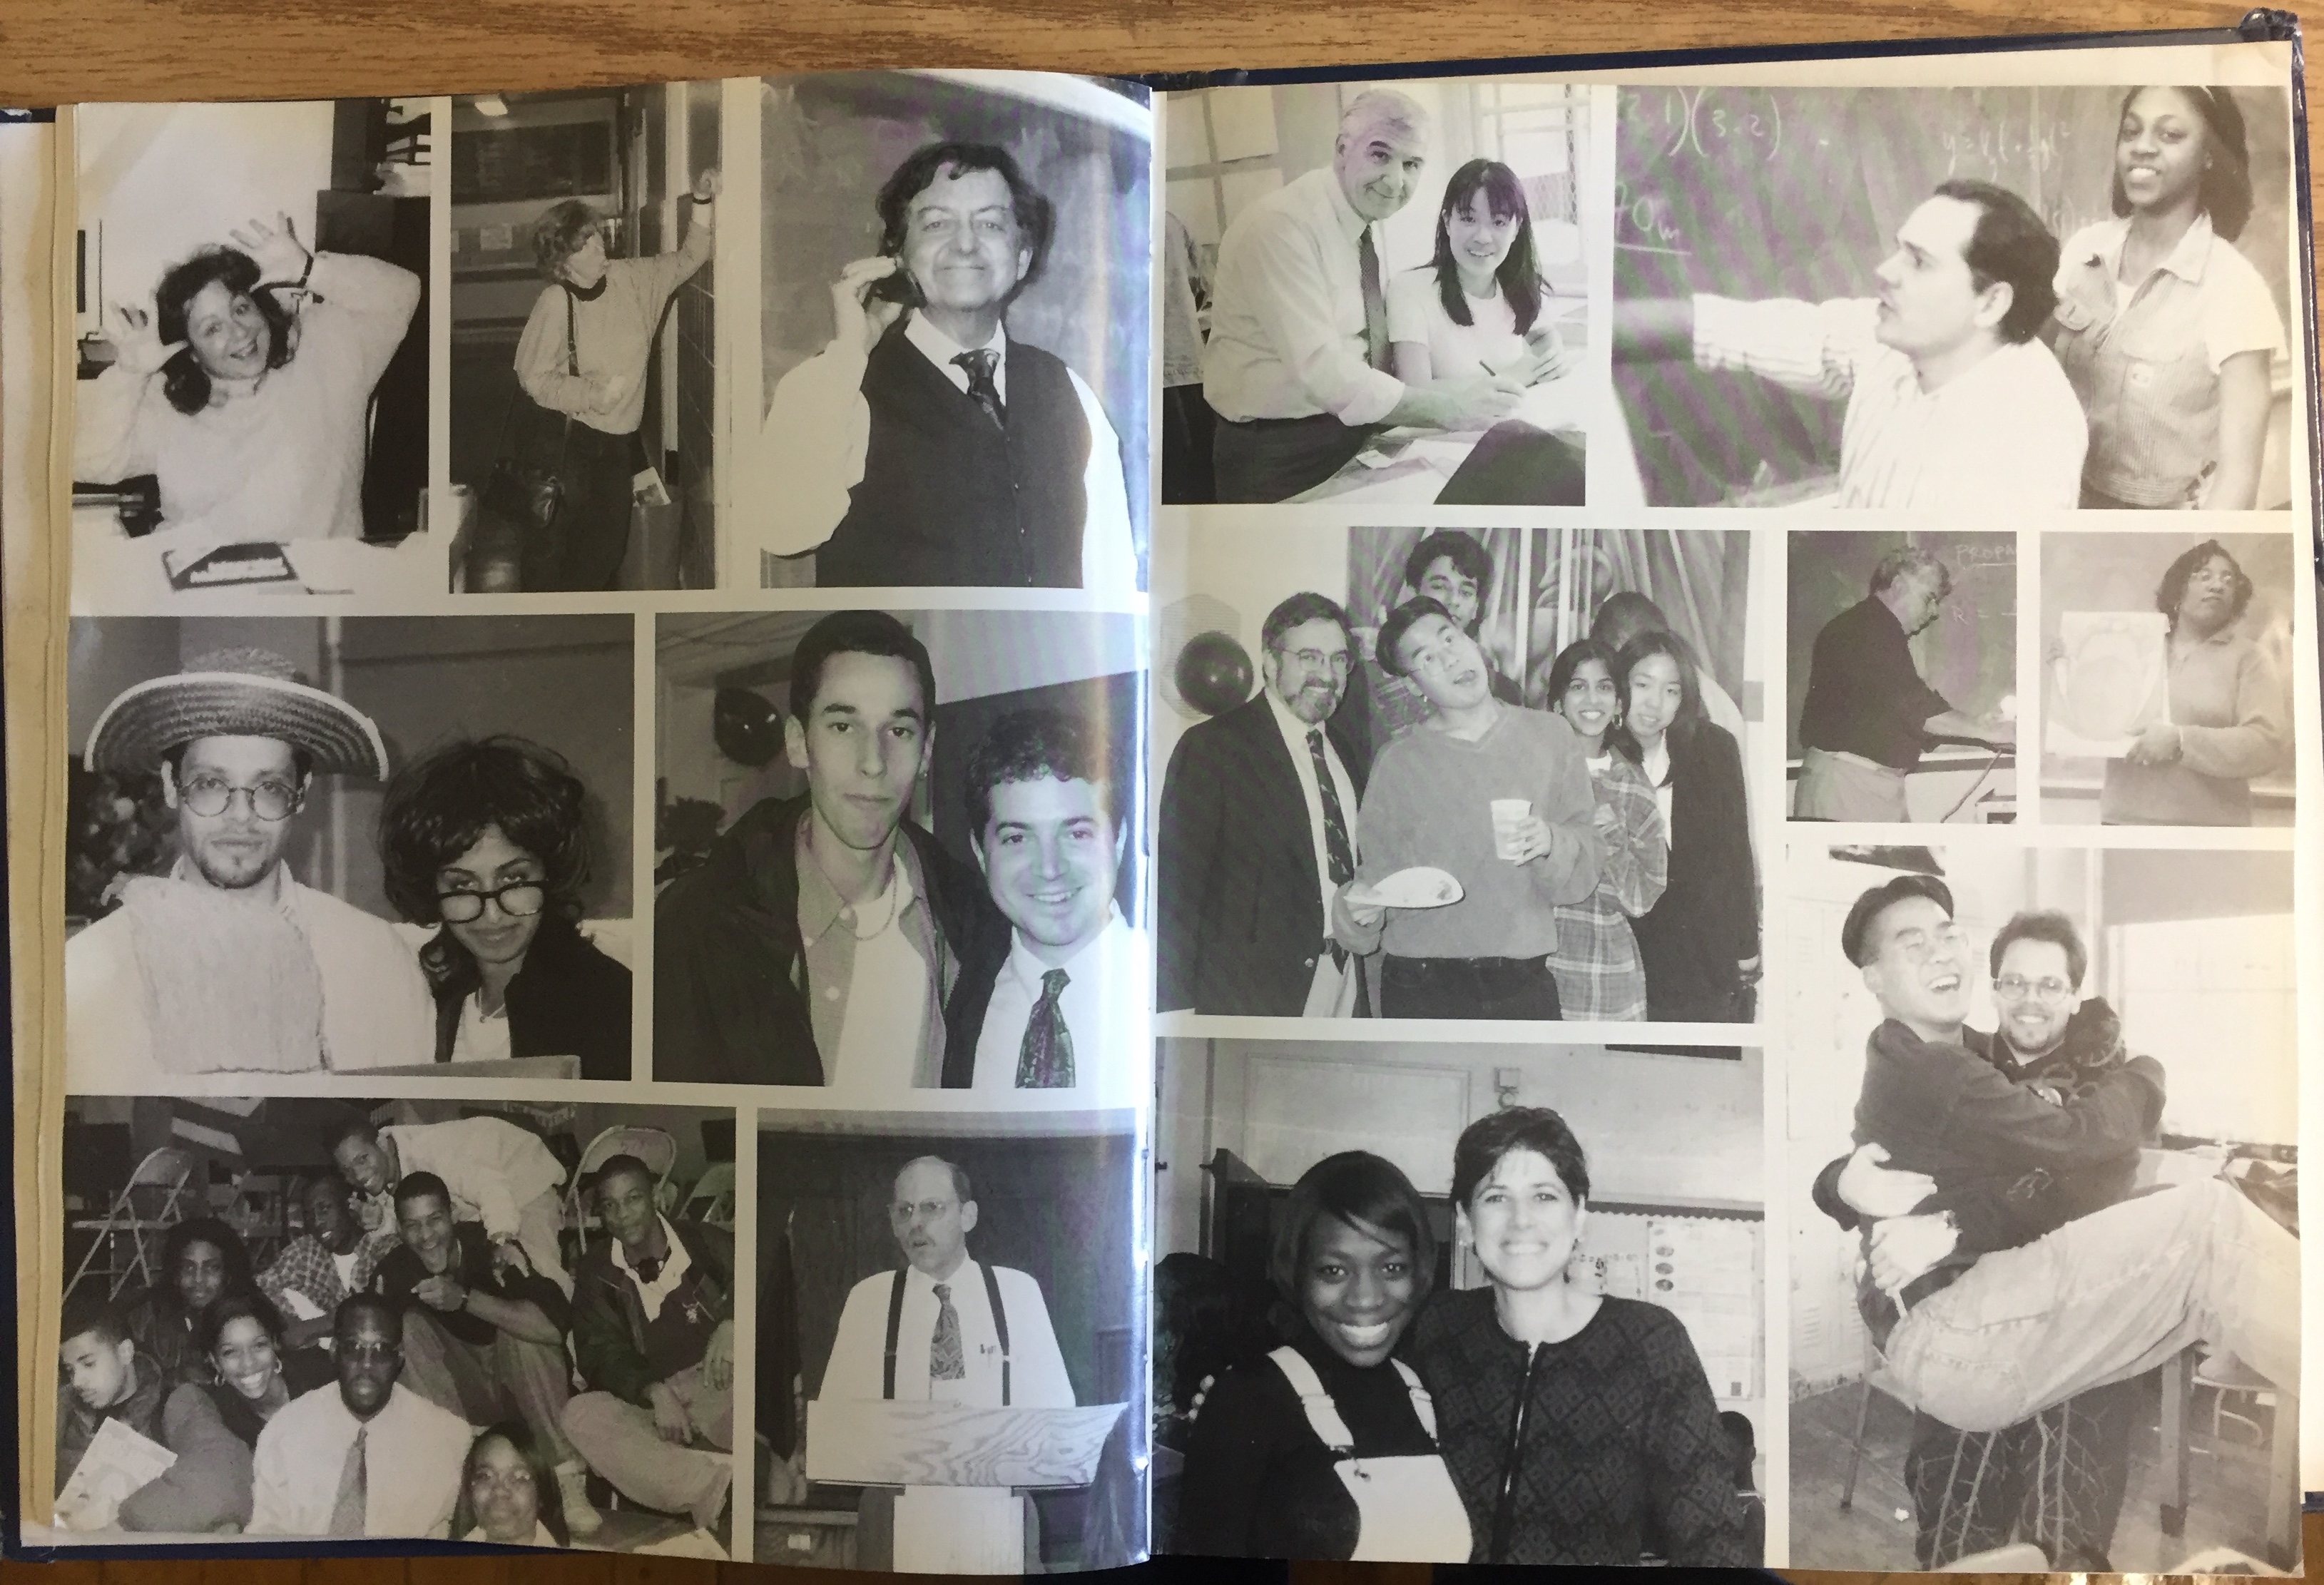 Midwood High School 1997 Yearbook Image